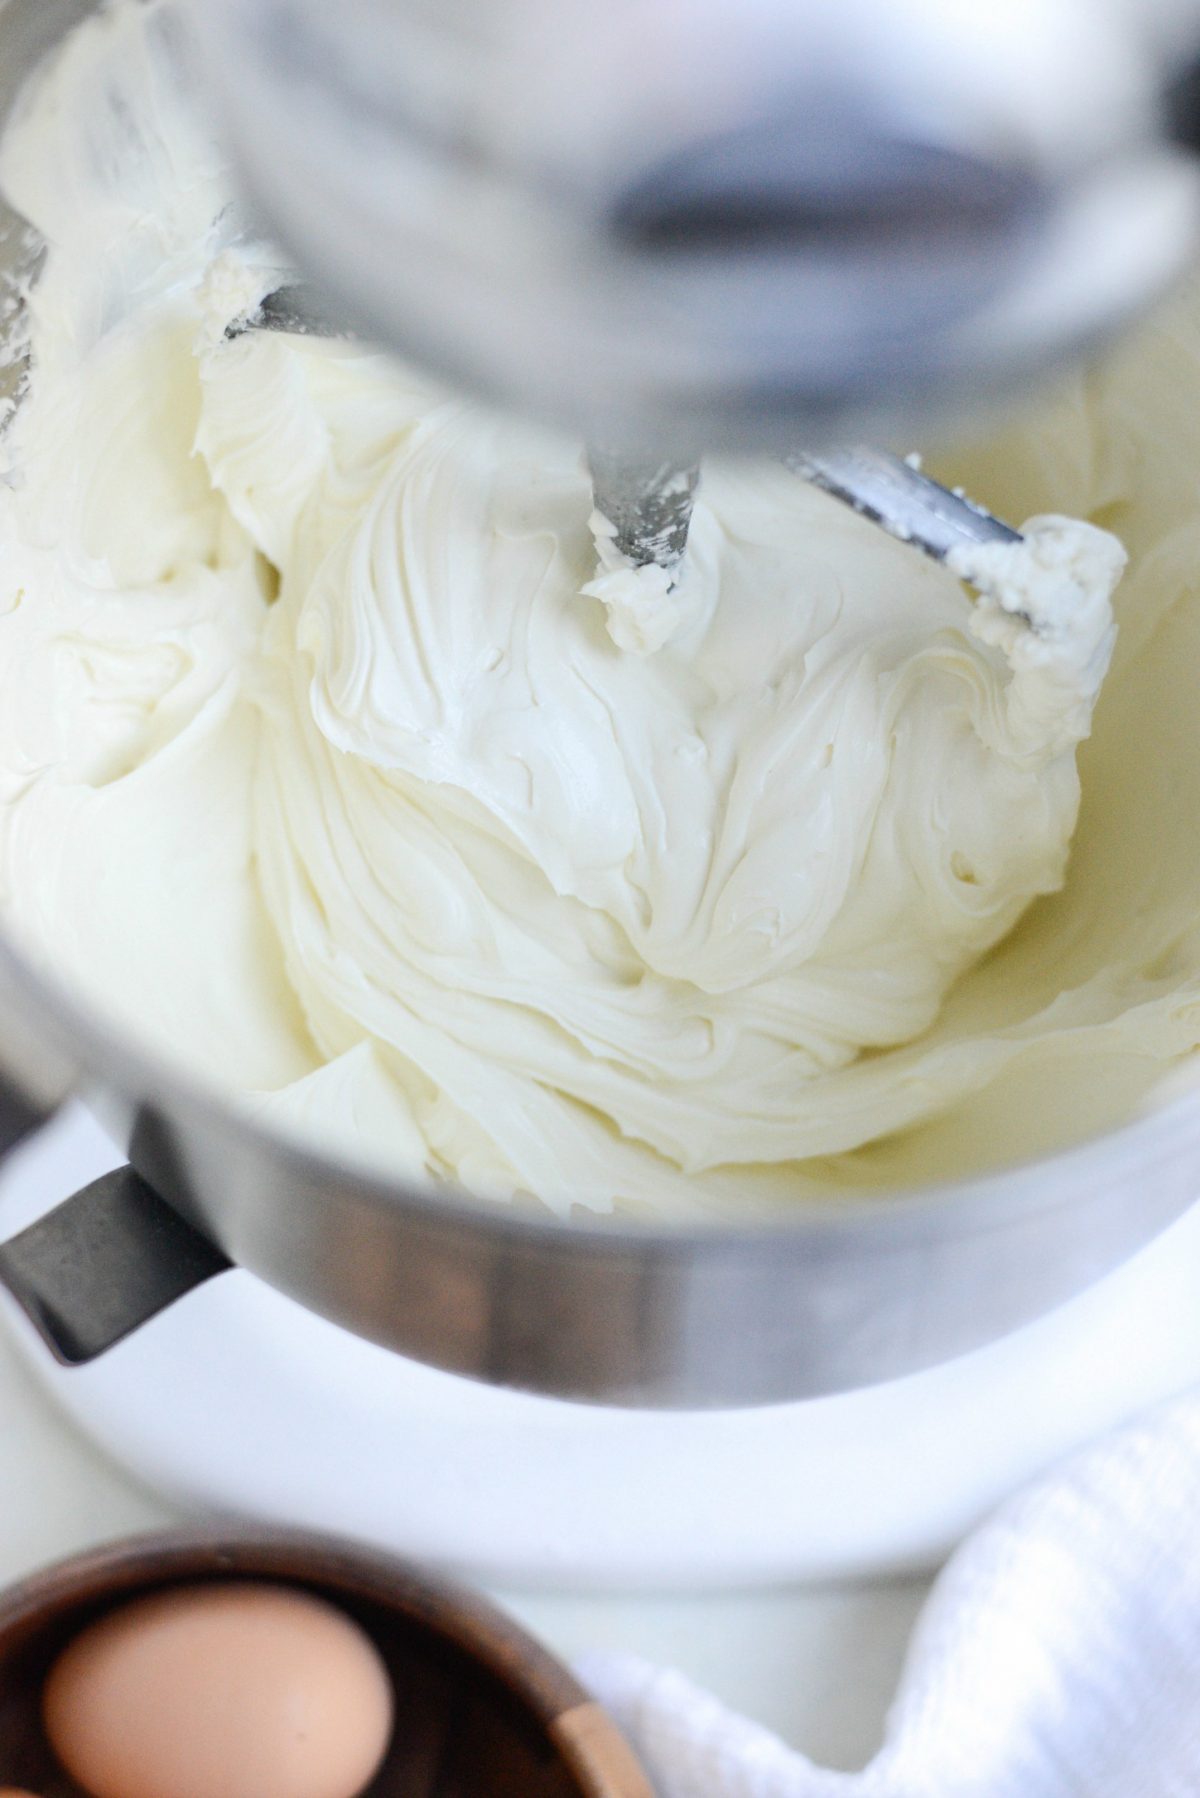 Add sour cream to cream cheese mixture